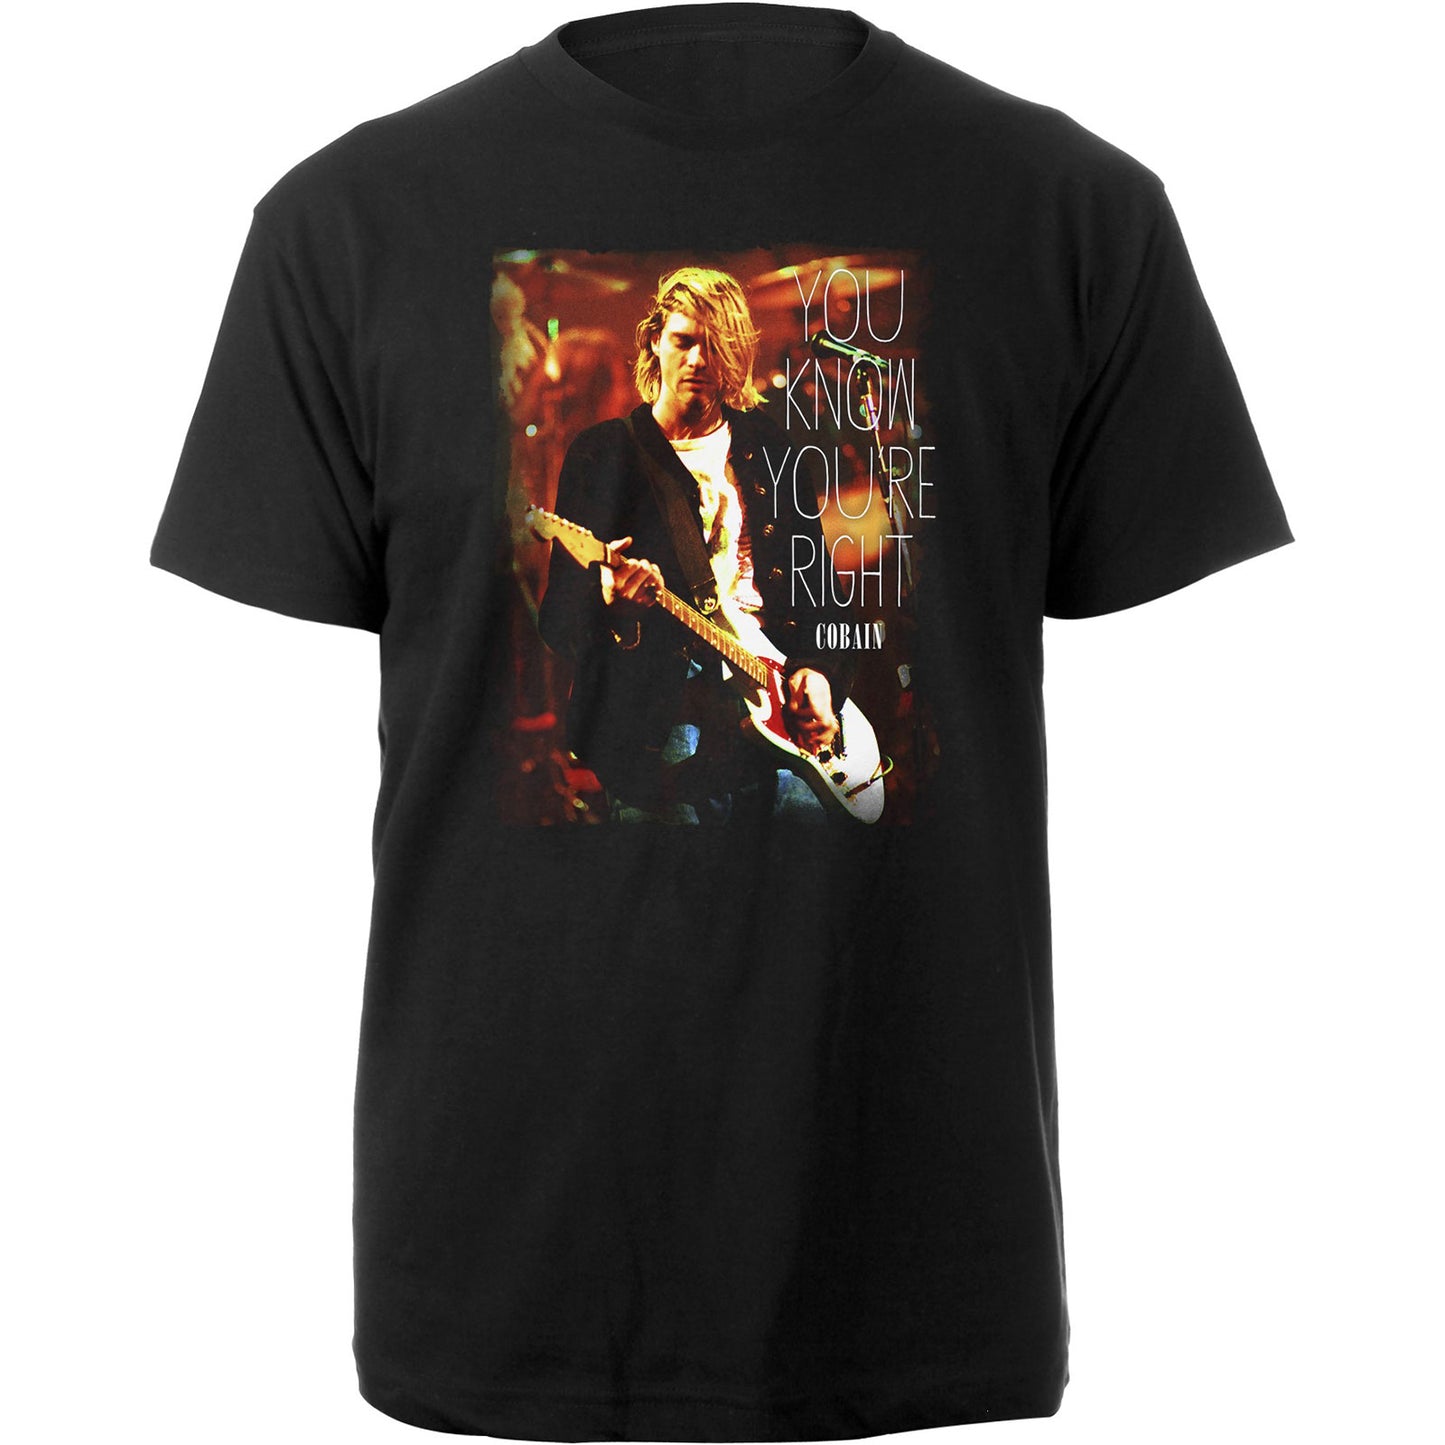 Kurt Cobain T-Shirt: You Know You're Right